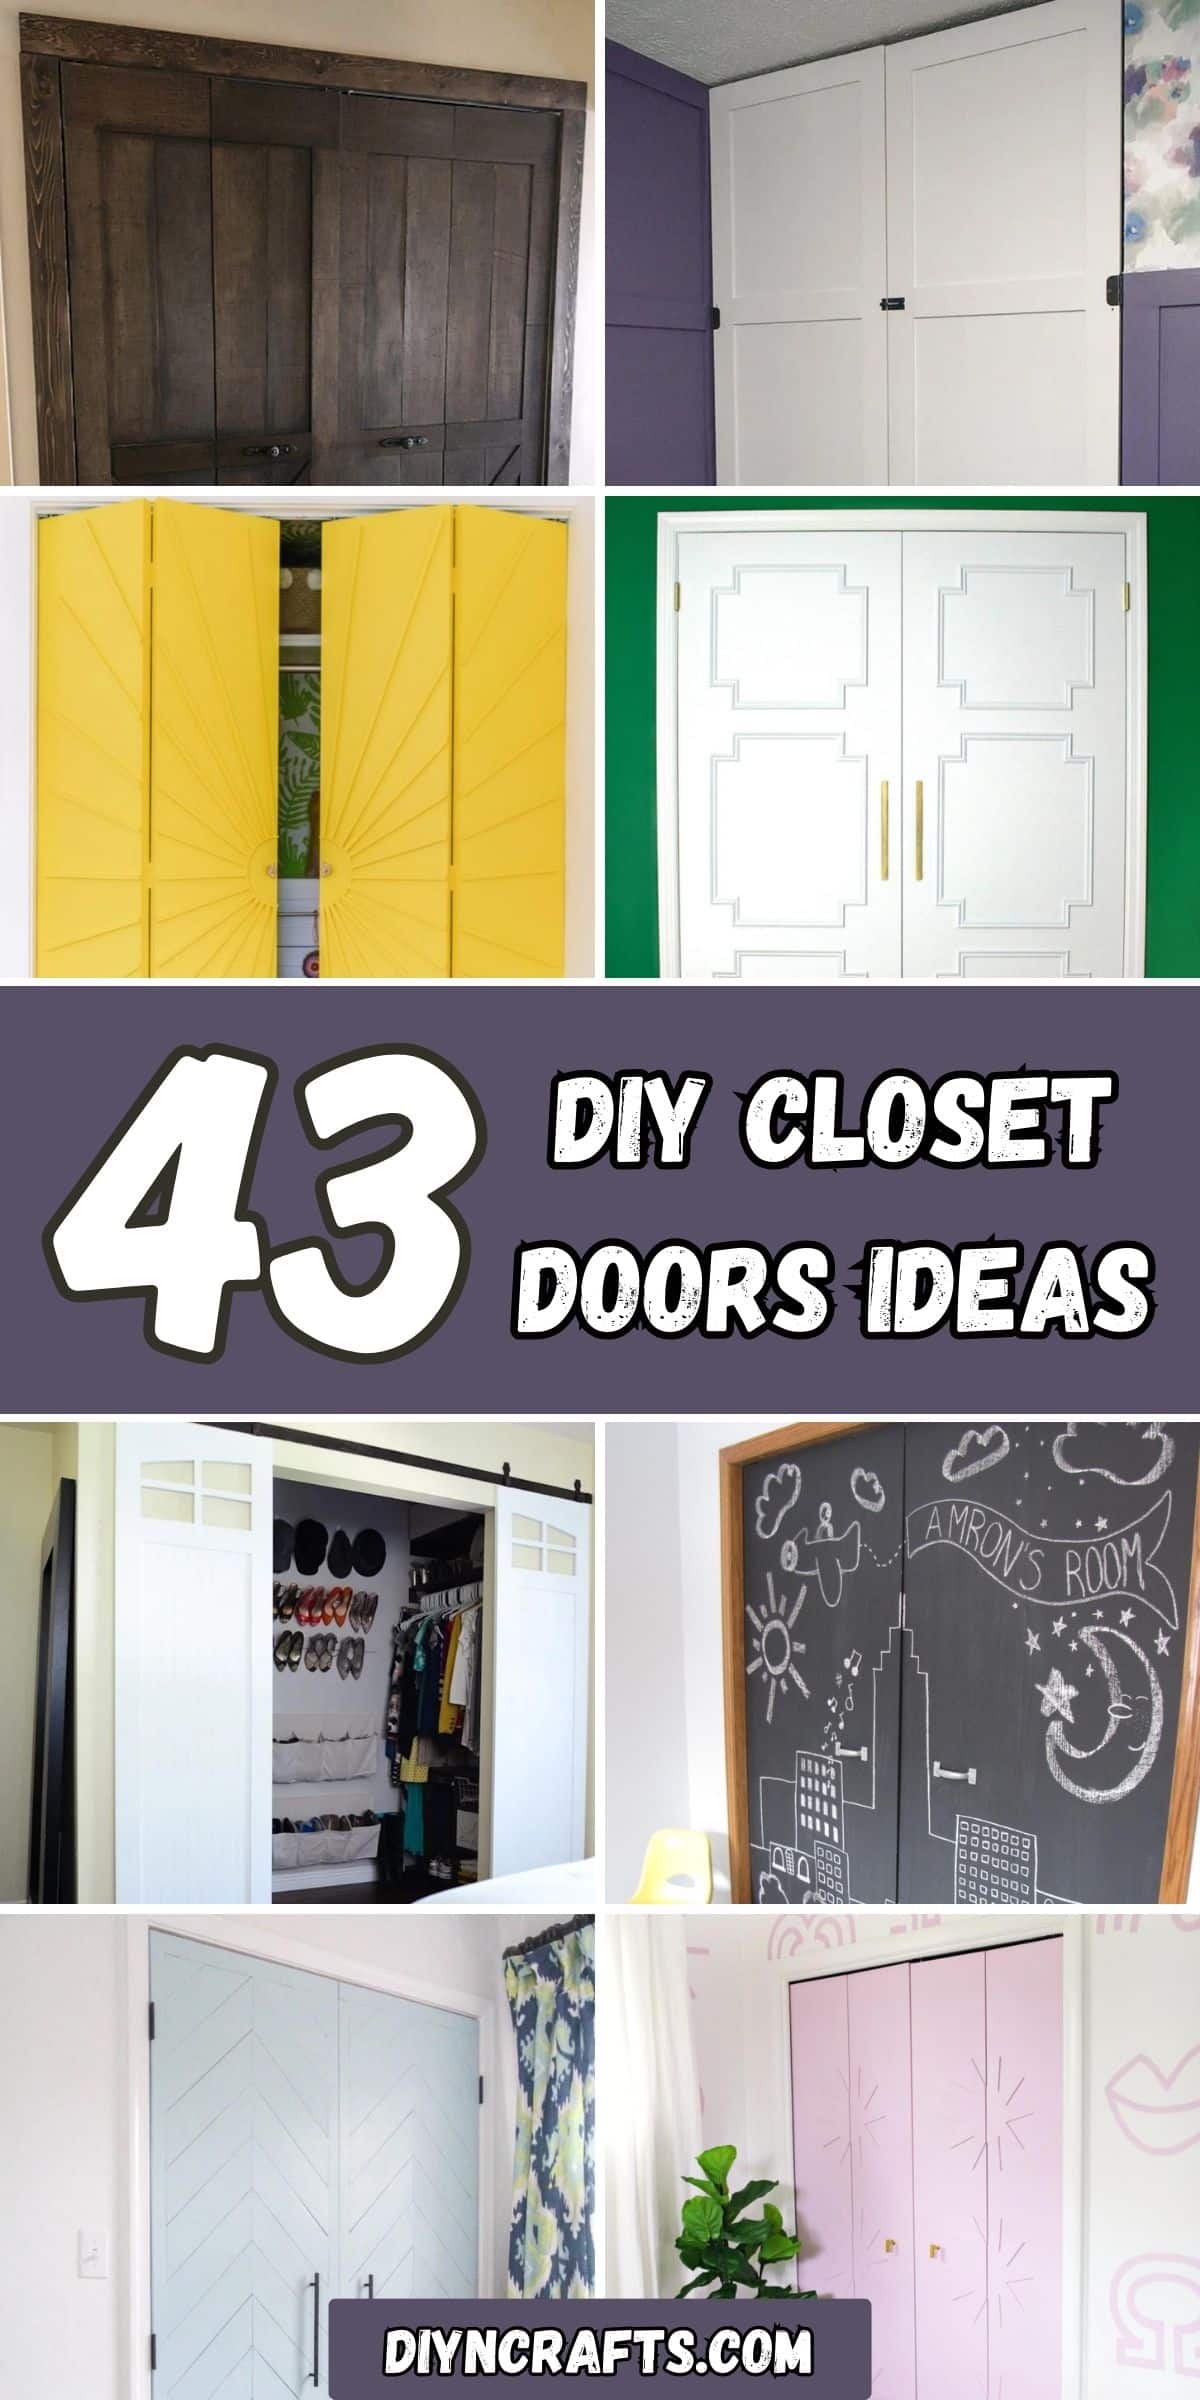 43 DIY Closet Doors Ideas collage.